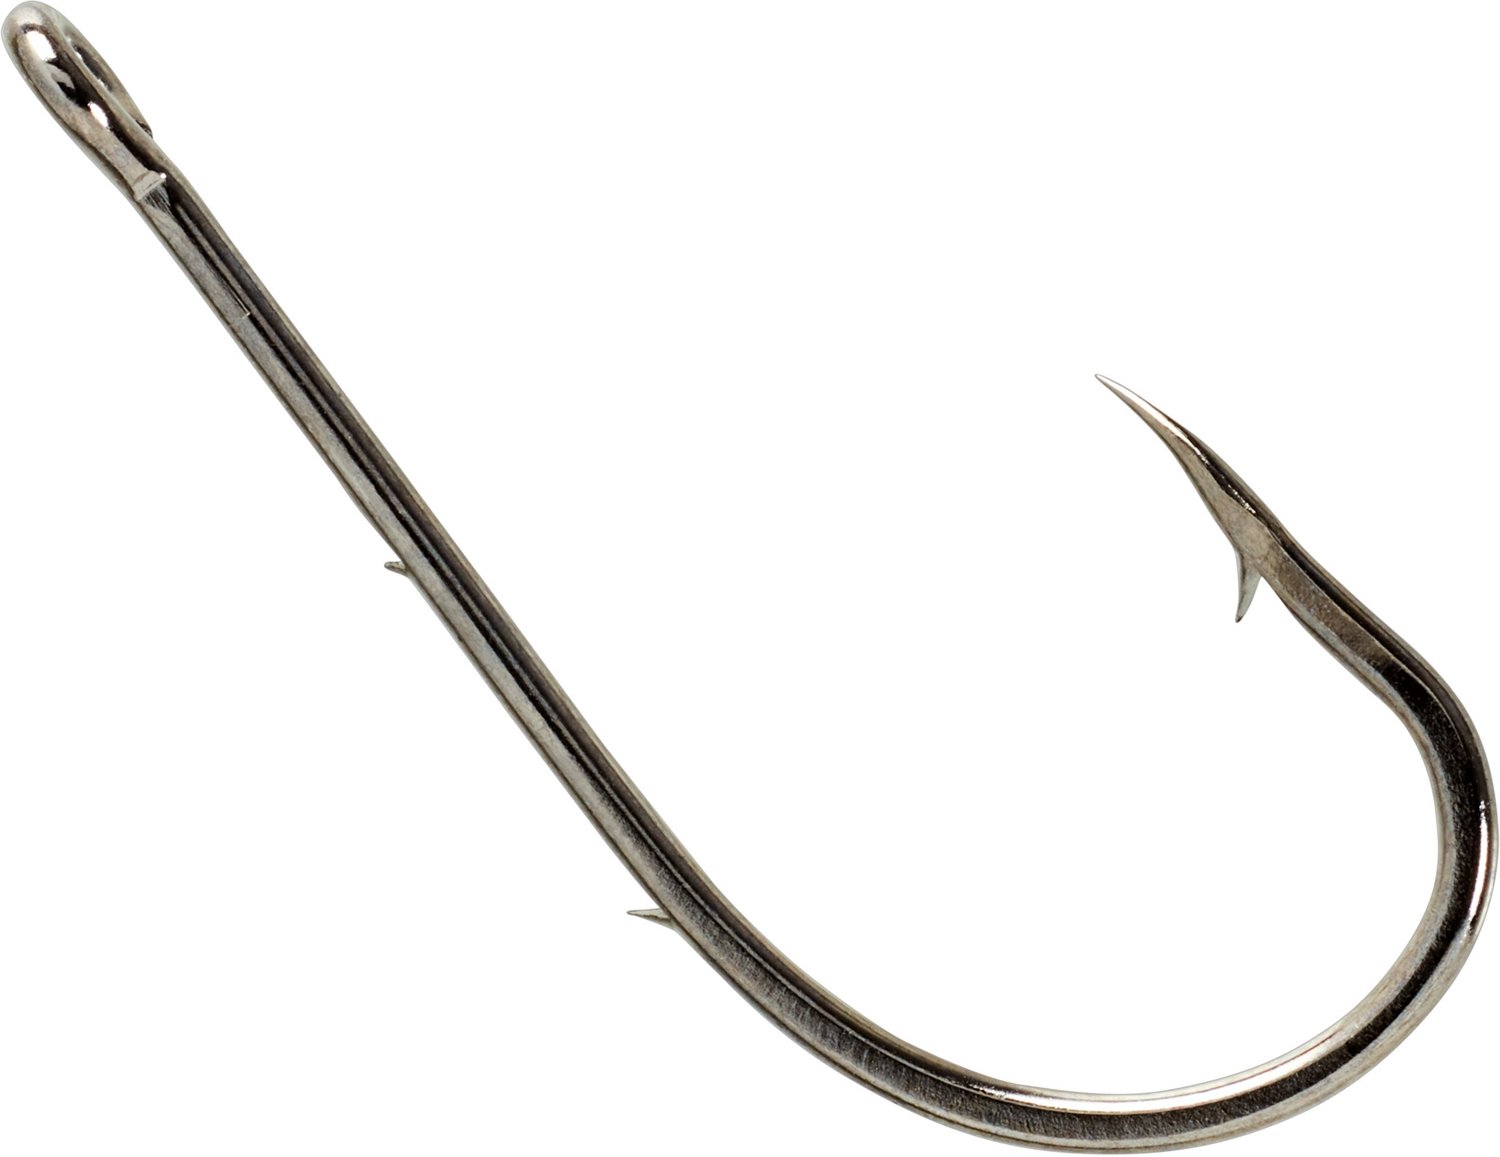  THKFISH 100Pcs/Box Fishing Hooks Drop Shot Hooks Wacky Worm Fish  Hooks Size #3#2#1 1/0 2/0 Offset Circle Hooks for Fishing : Sports &  Outdoors